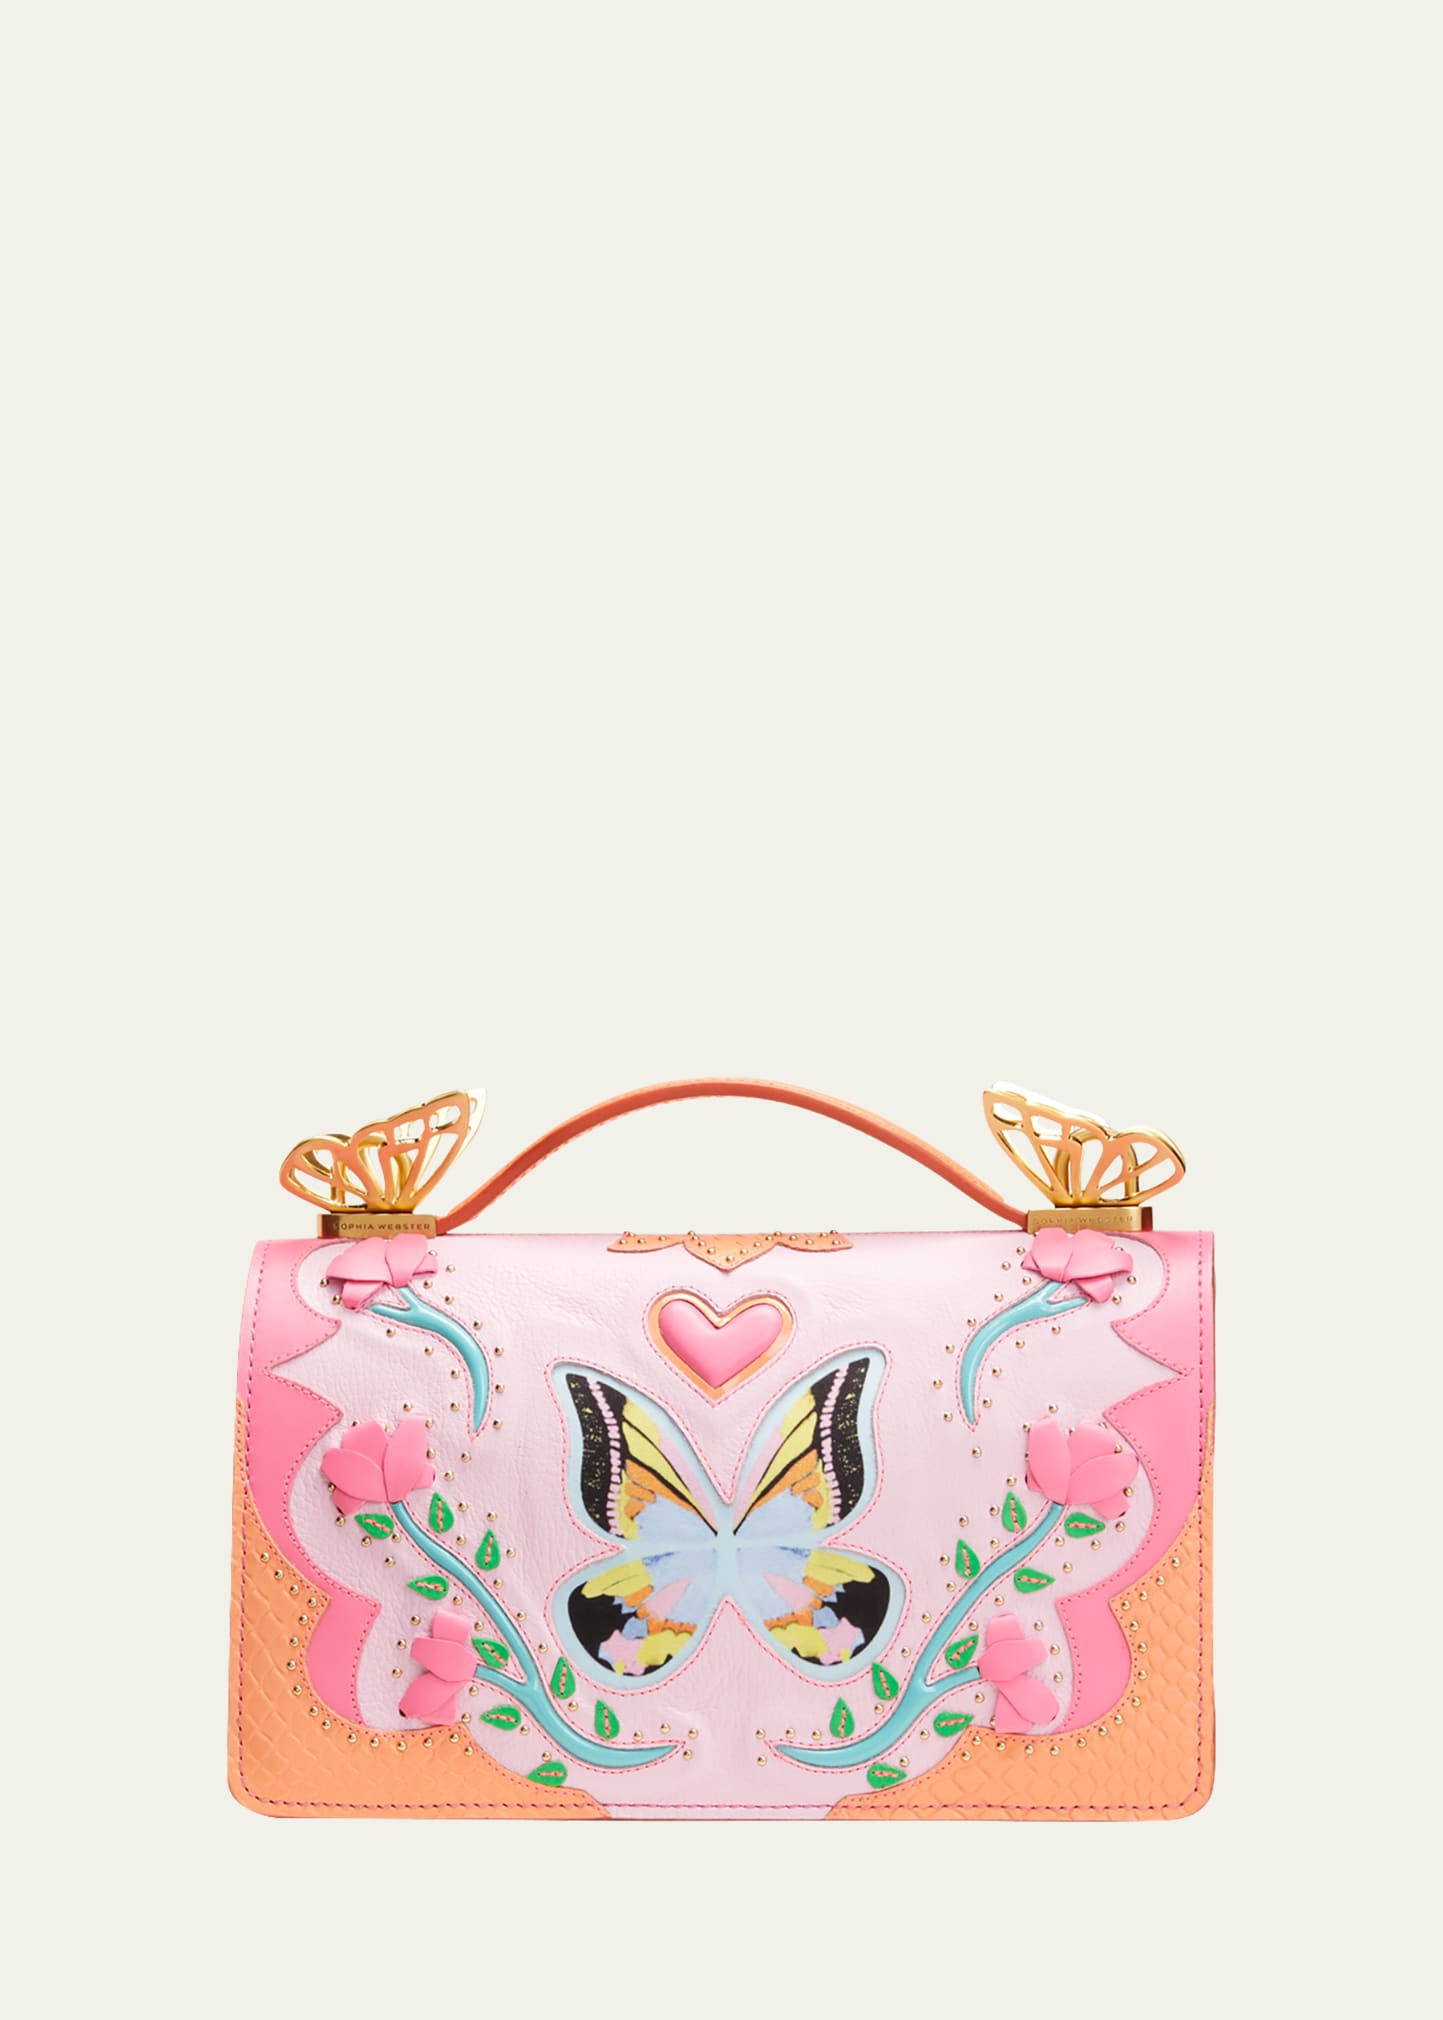 Sophia Webster Mariposa Studded Flower Leather Shoulder Bag In Peach